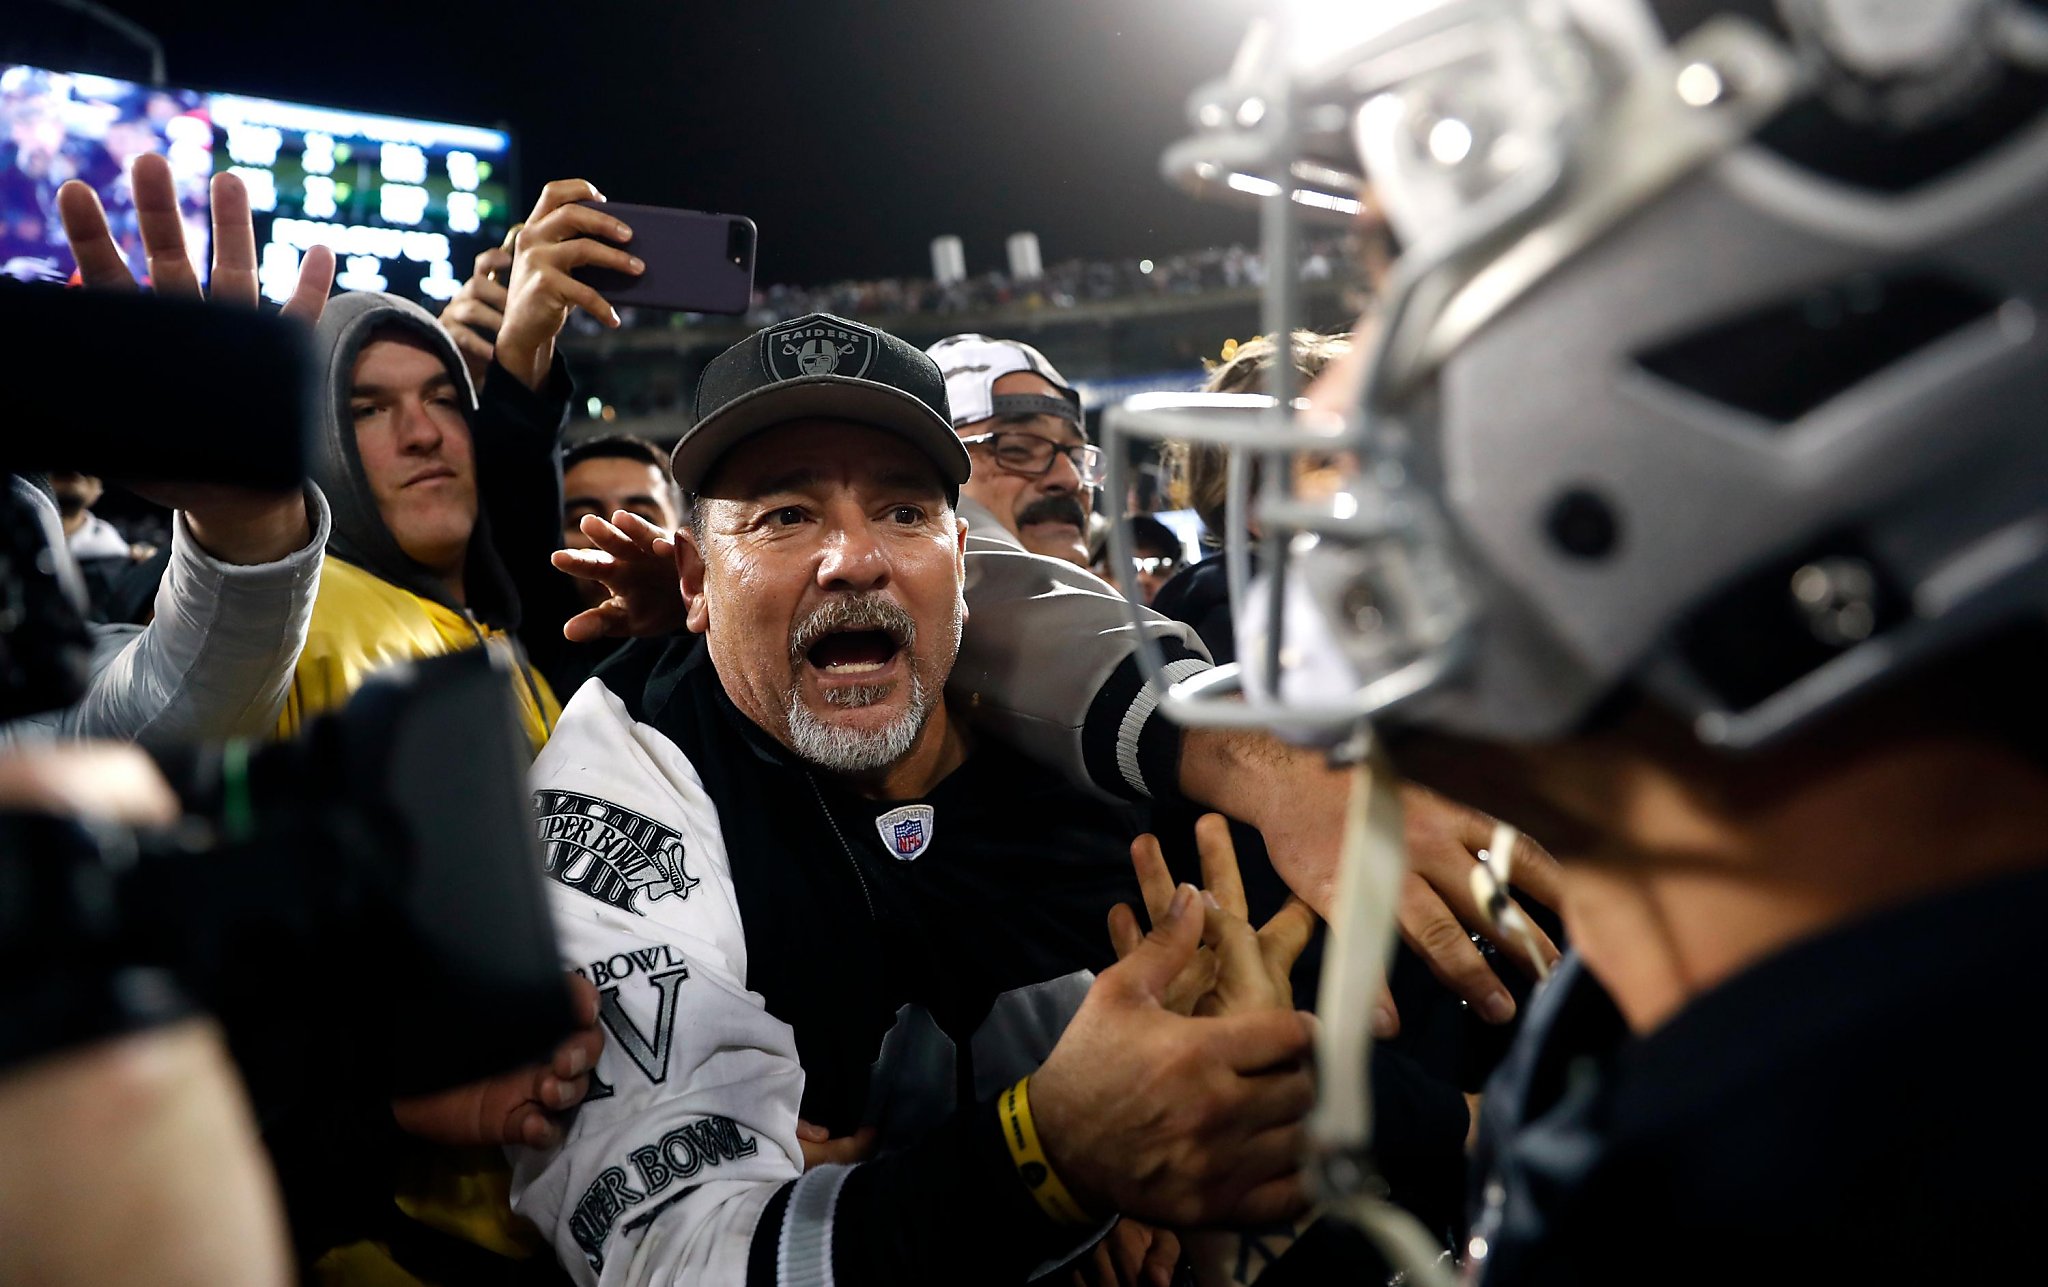 Report: Raiders choose San Francisco Giants' stadium for 2019 home